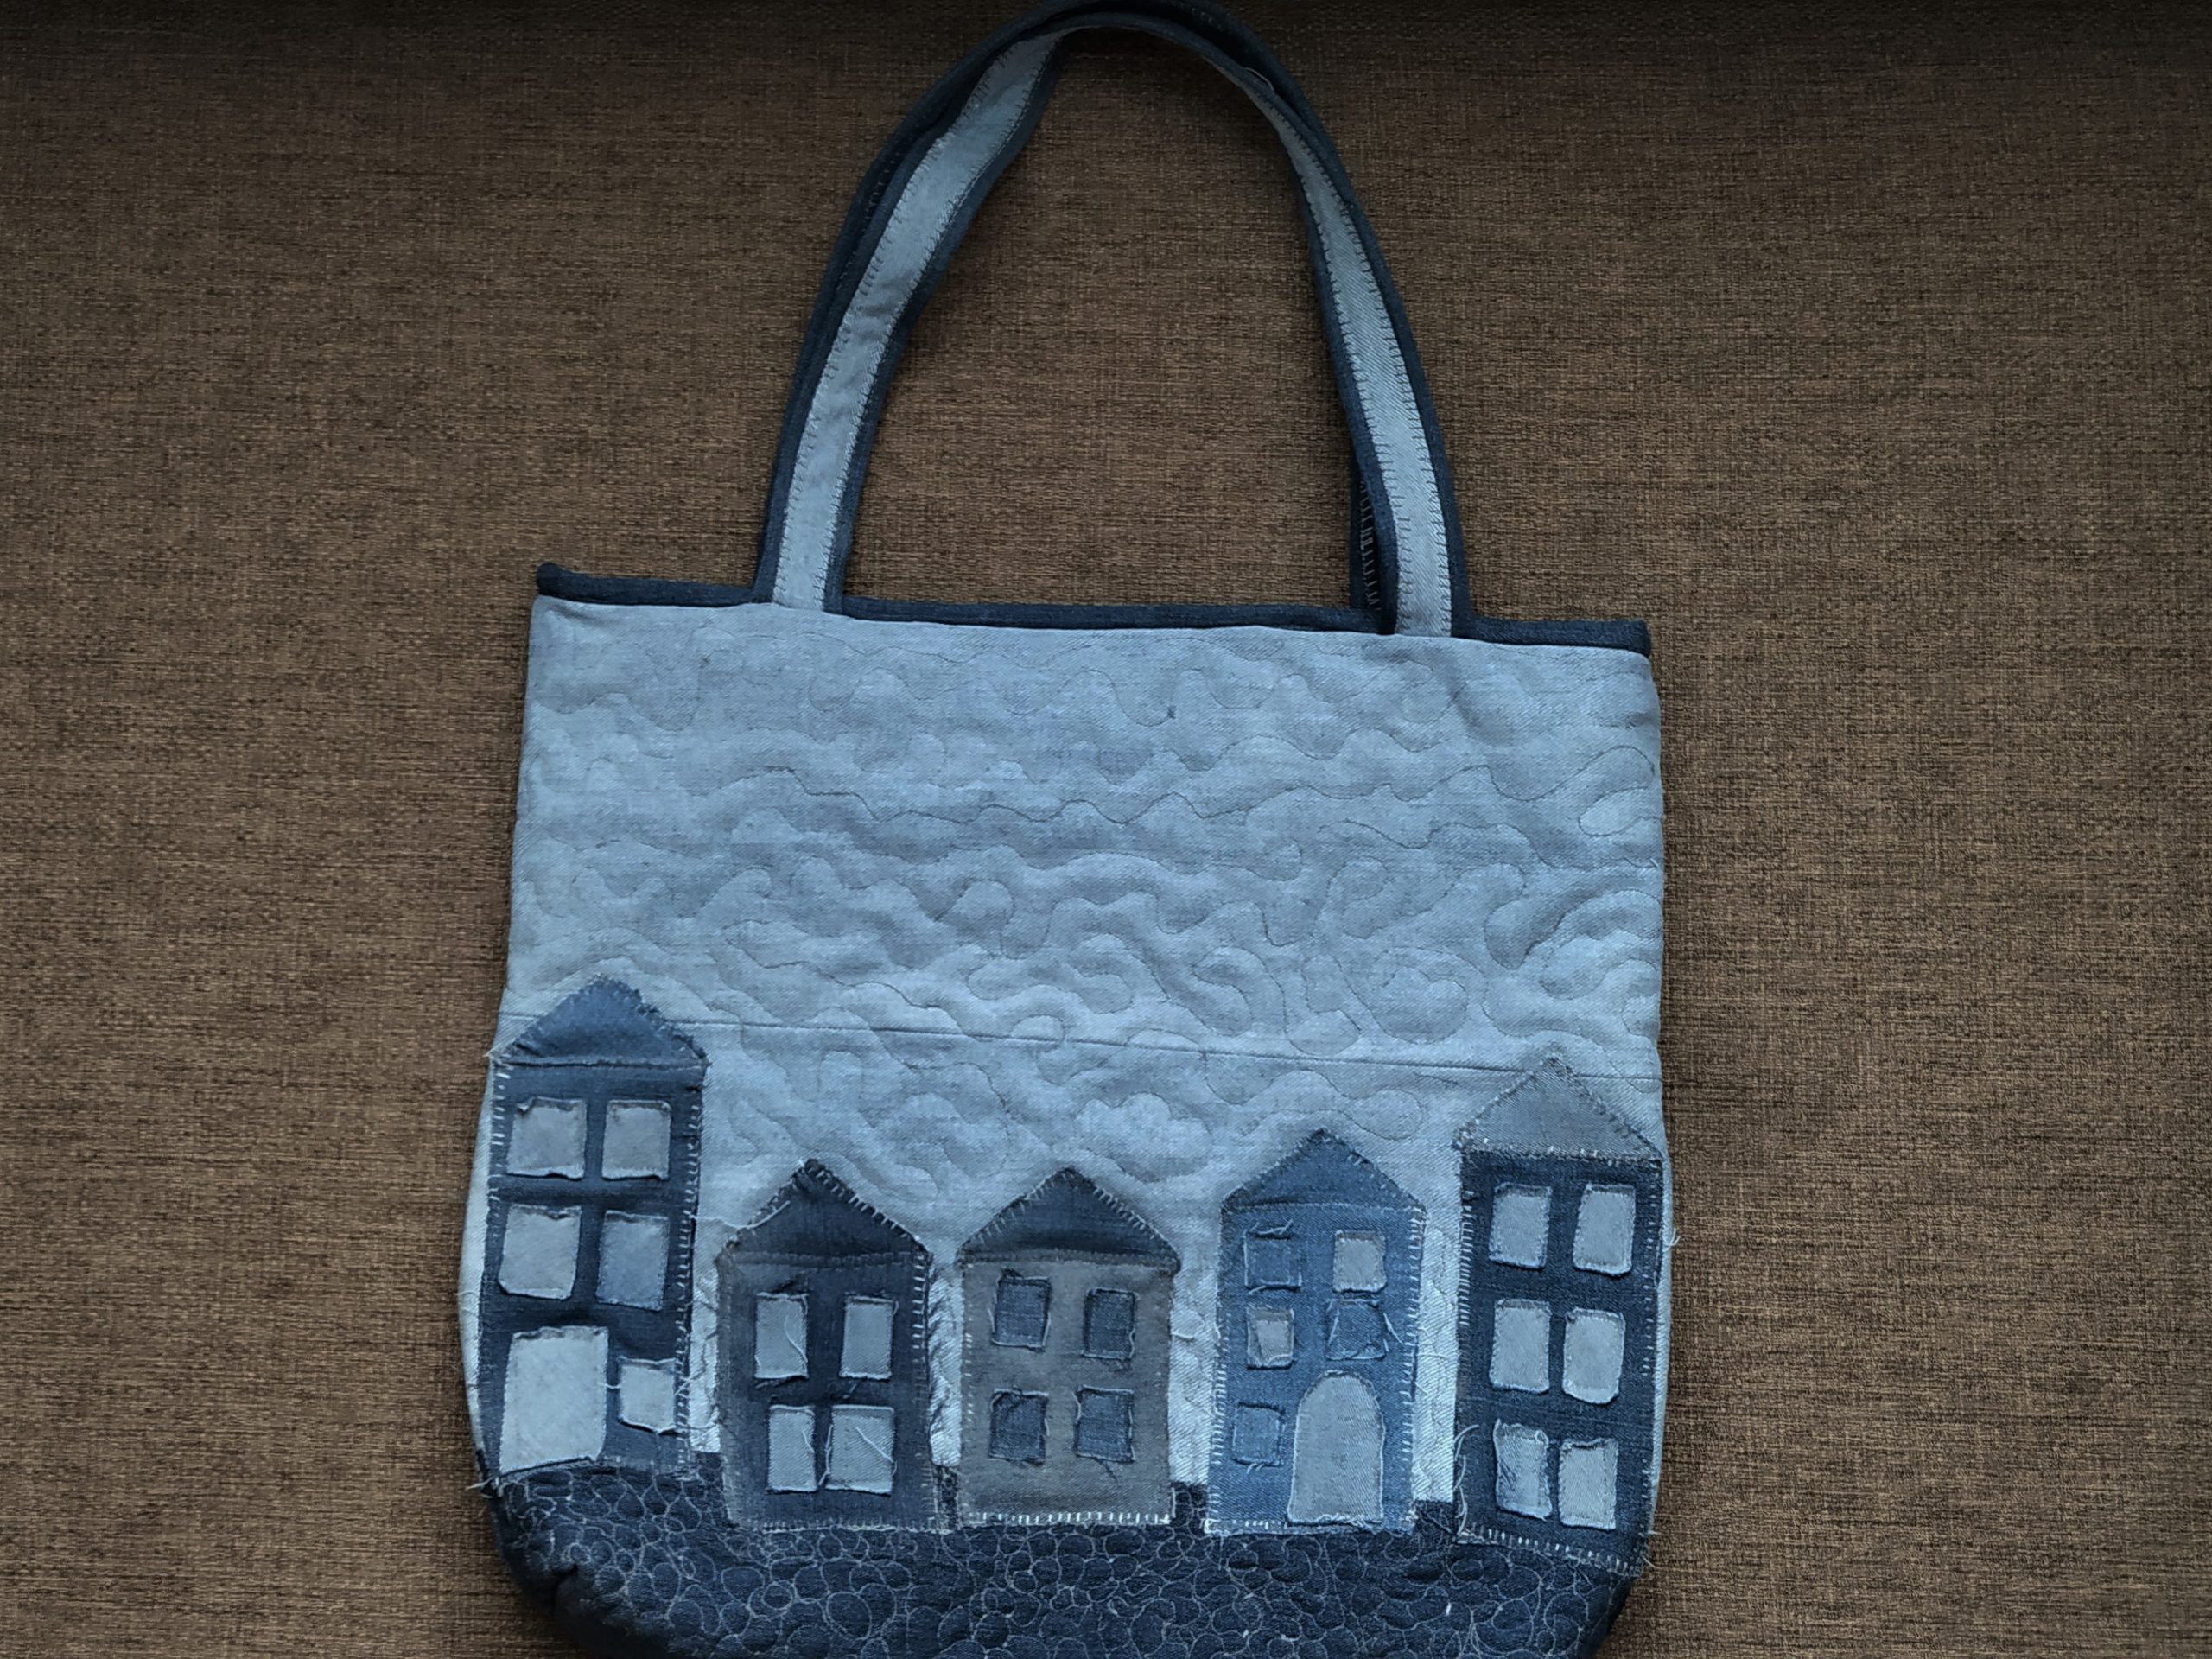 Pretty Project Bag for Embroidery Process - Crealandia